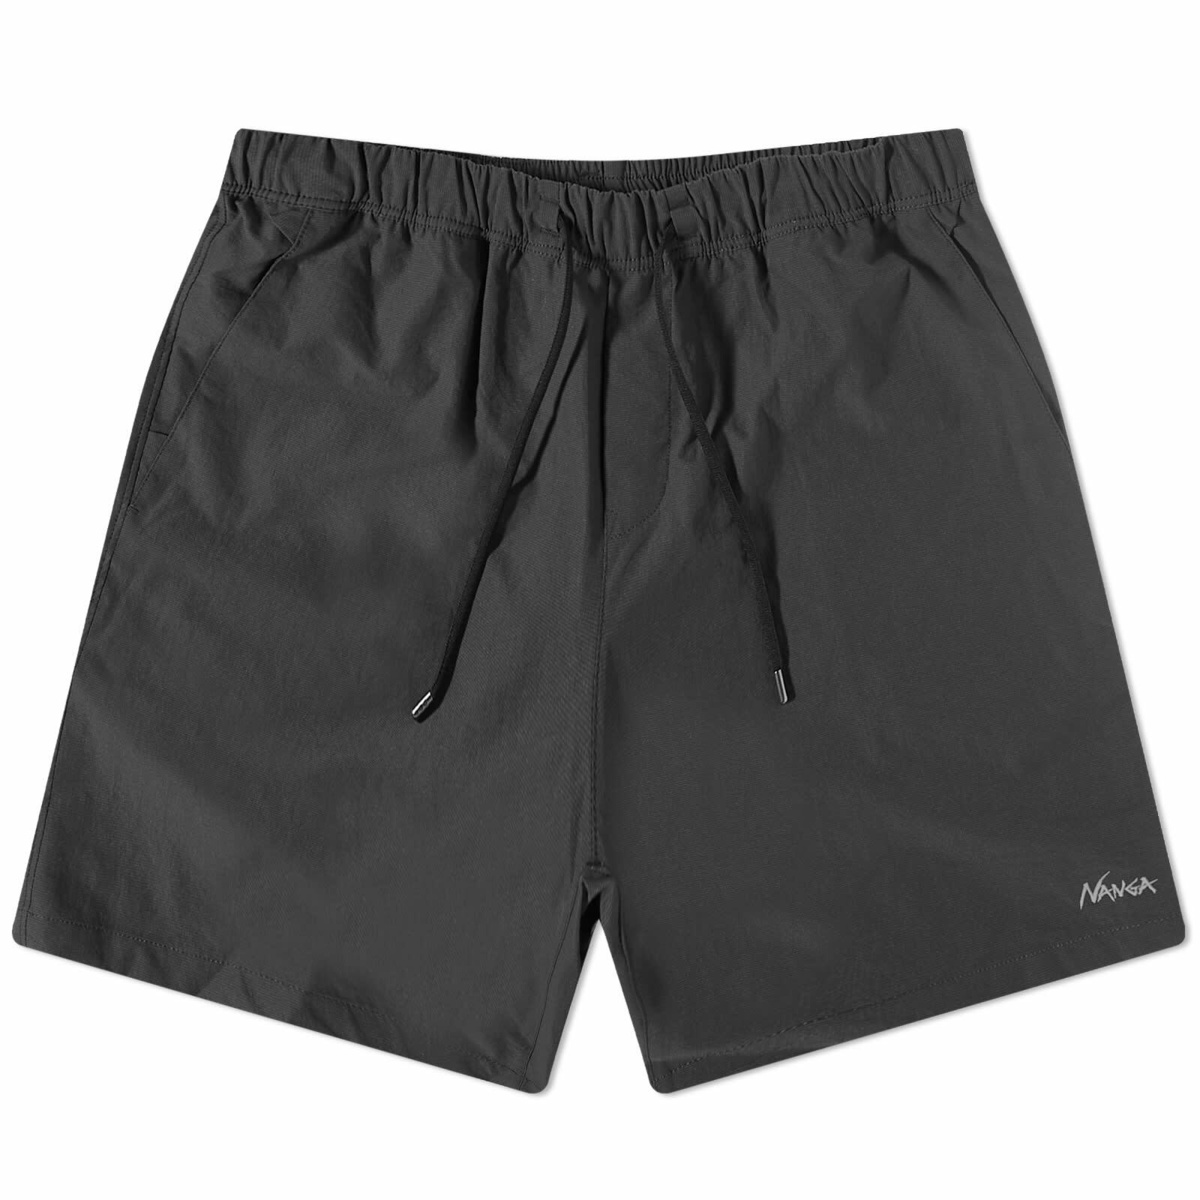 Shop Adidas Men's Performance Boxer Briefs Underwear 3-Pack -  Black/Grey/Black - Dick Smith